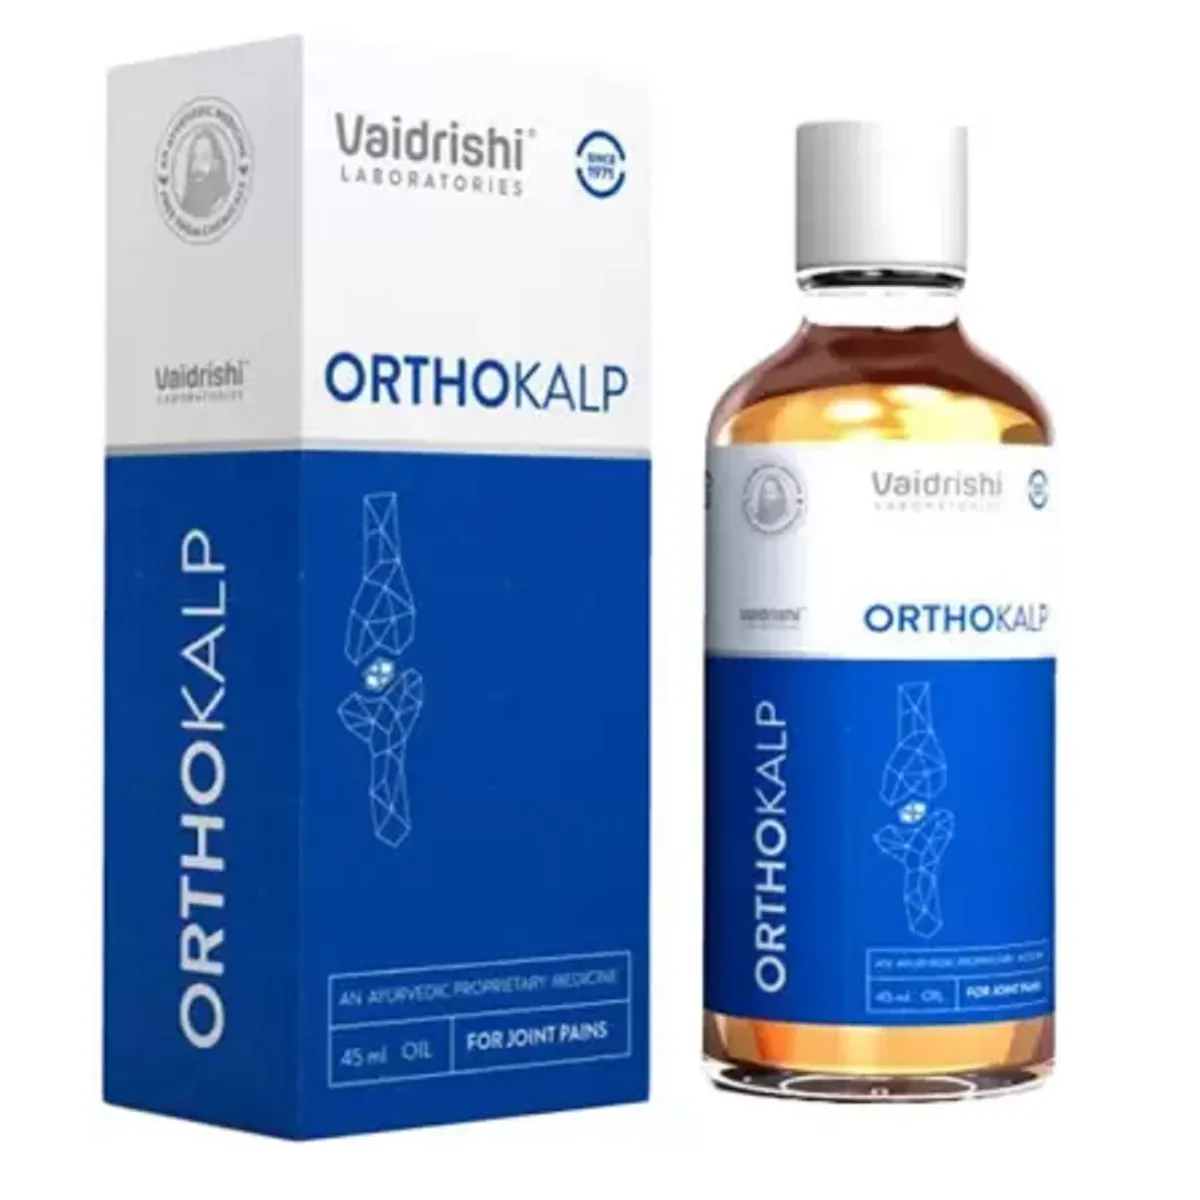 Vaidrishi Orthokalp Oil For Joint Pains 45ml